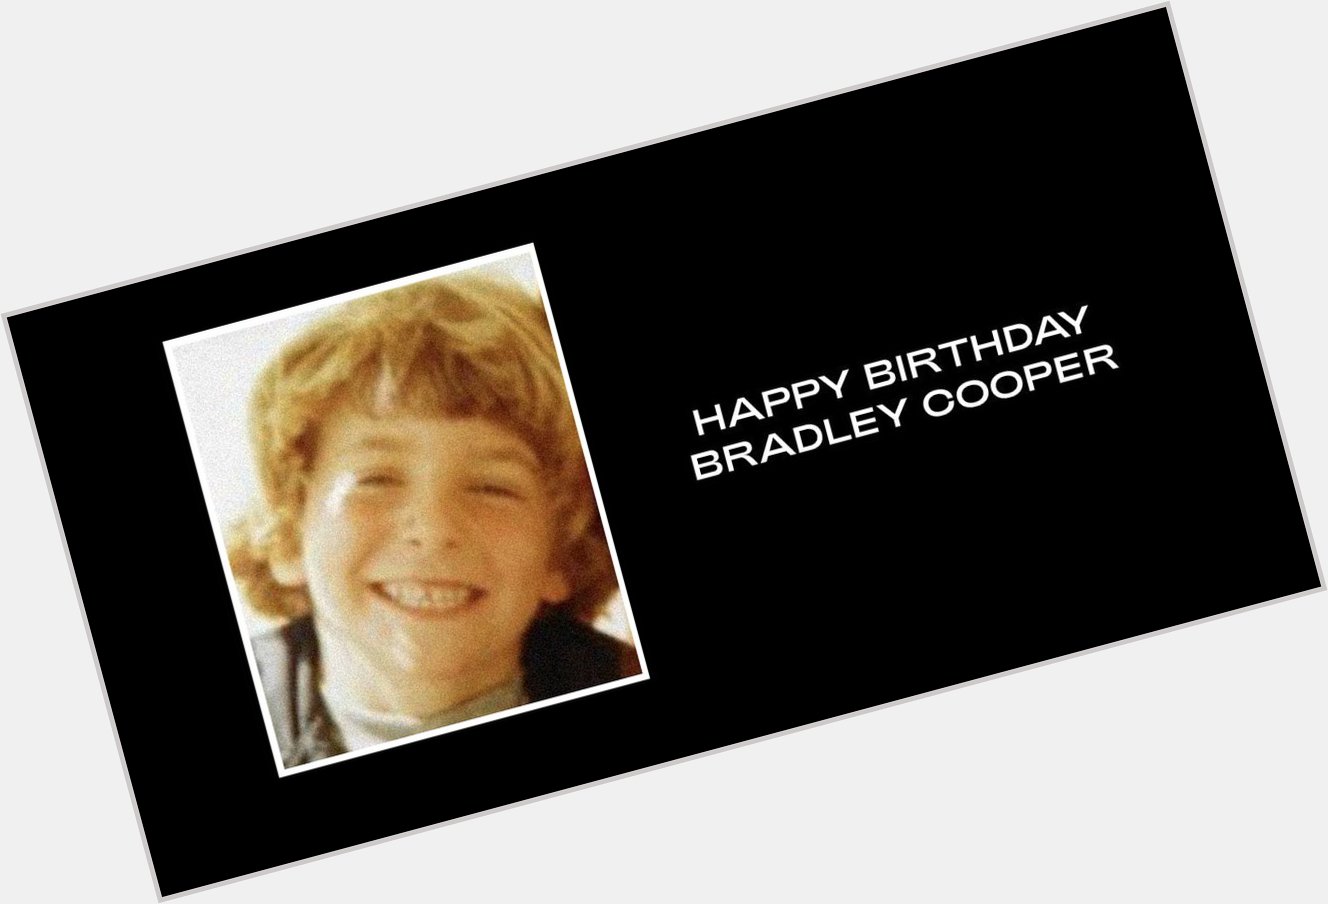 Happy Birthday Bradley Cooper! via  